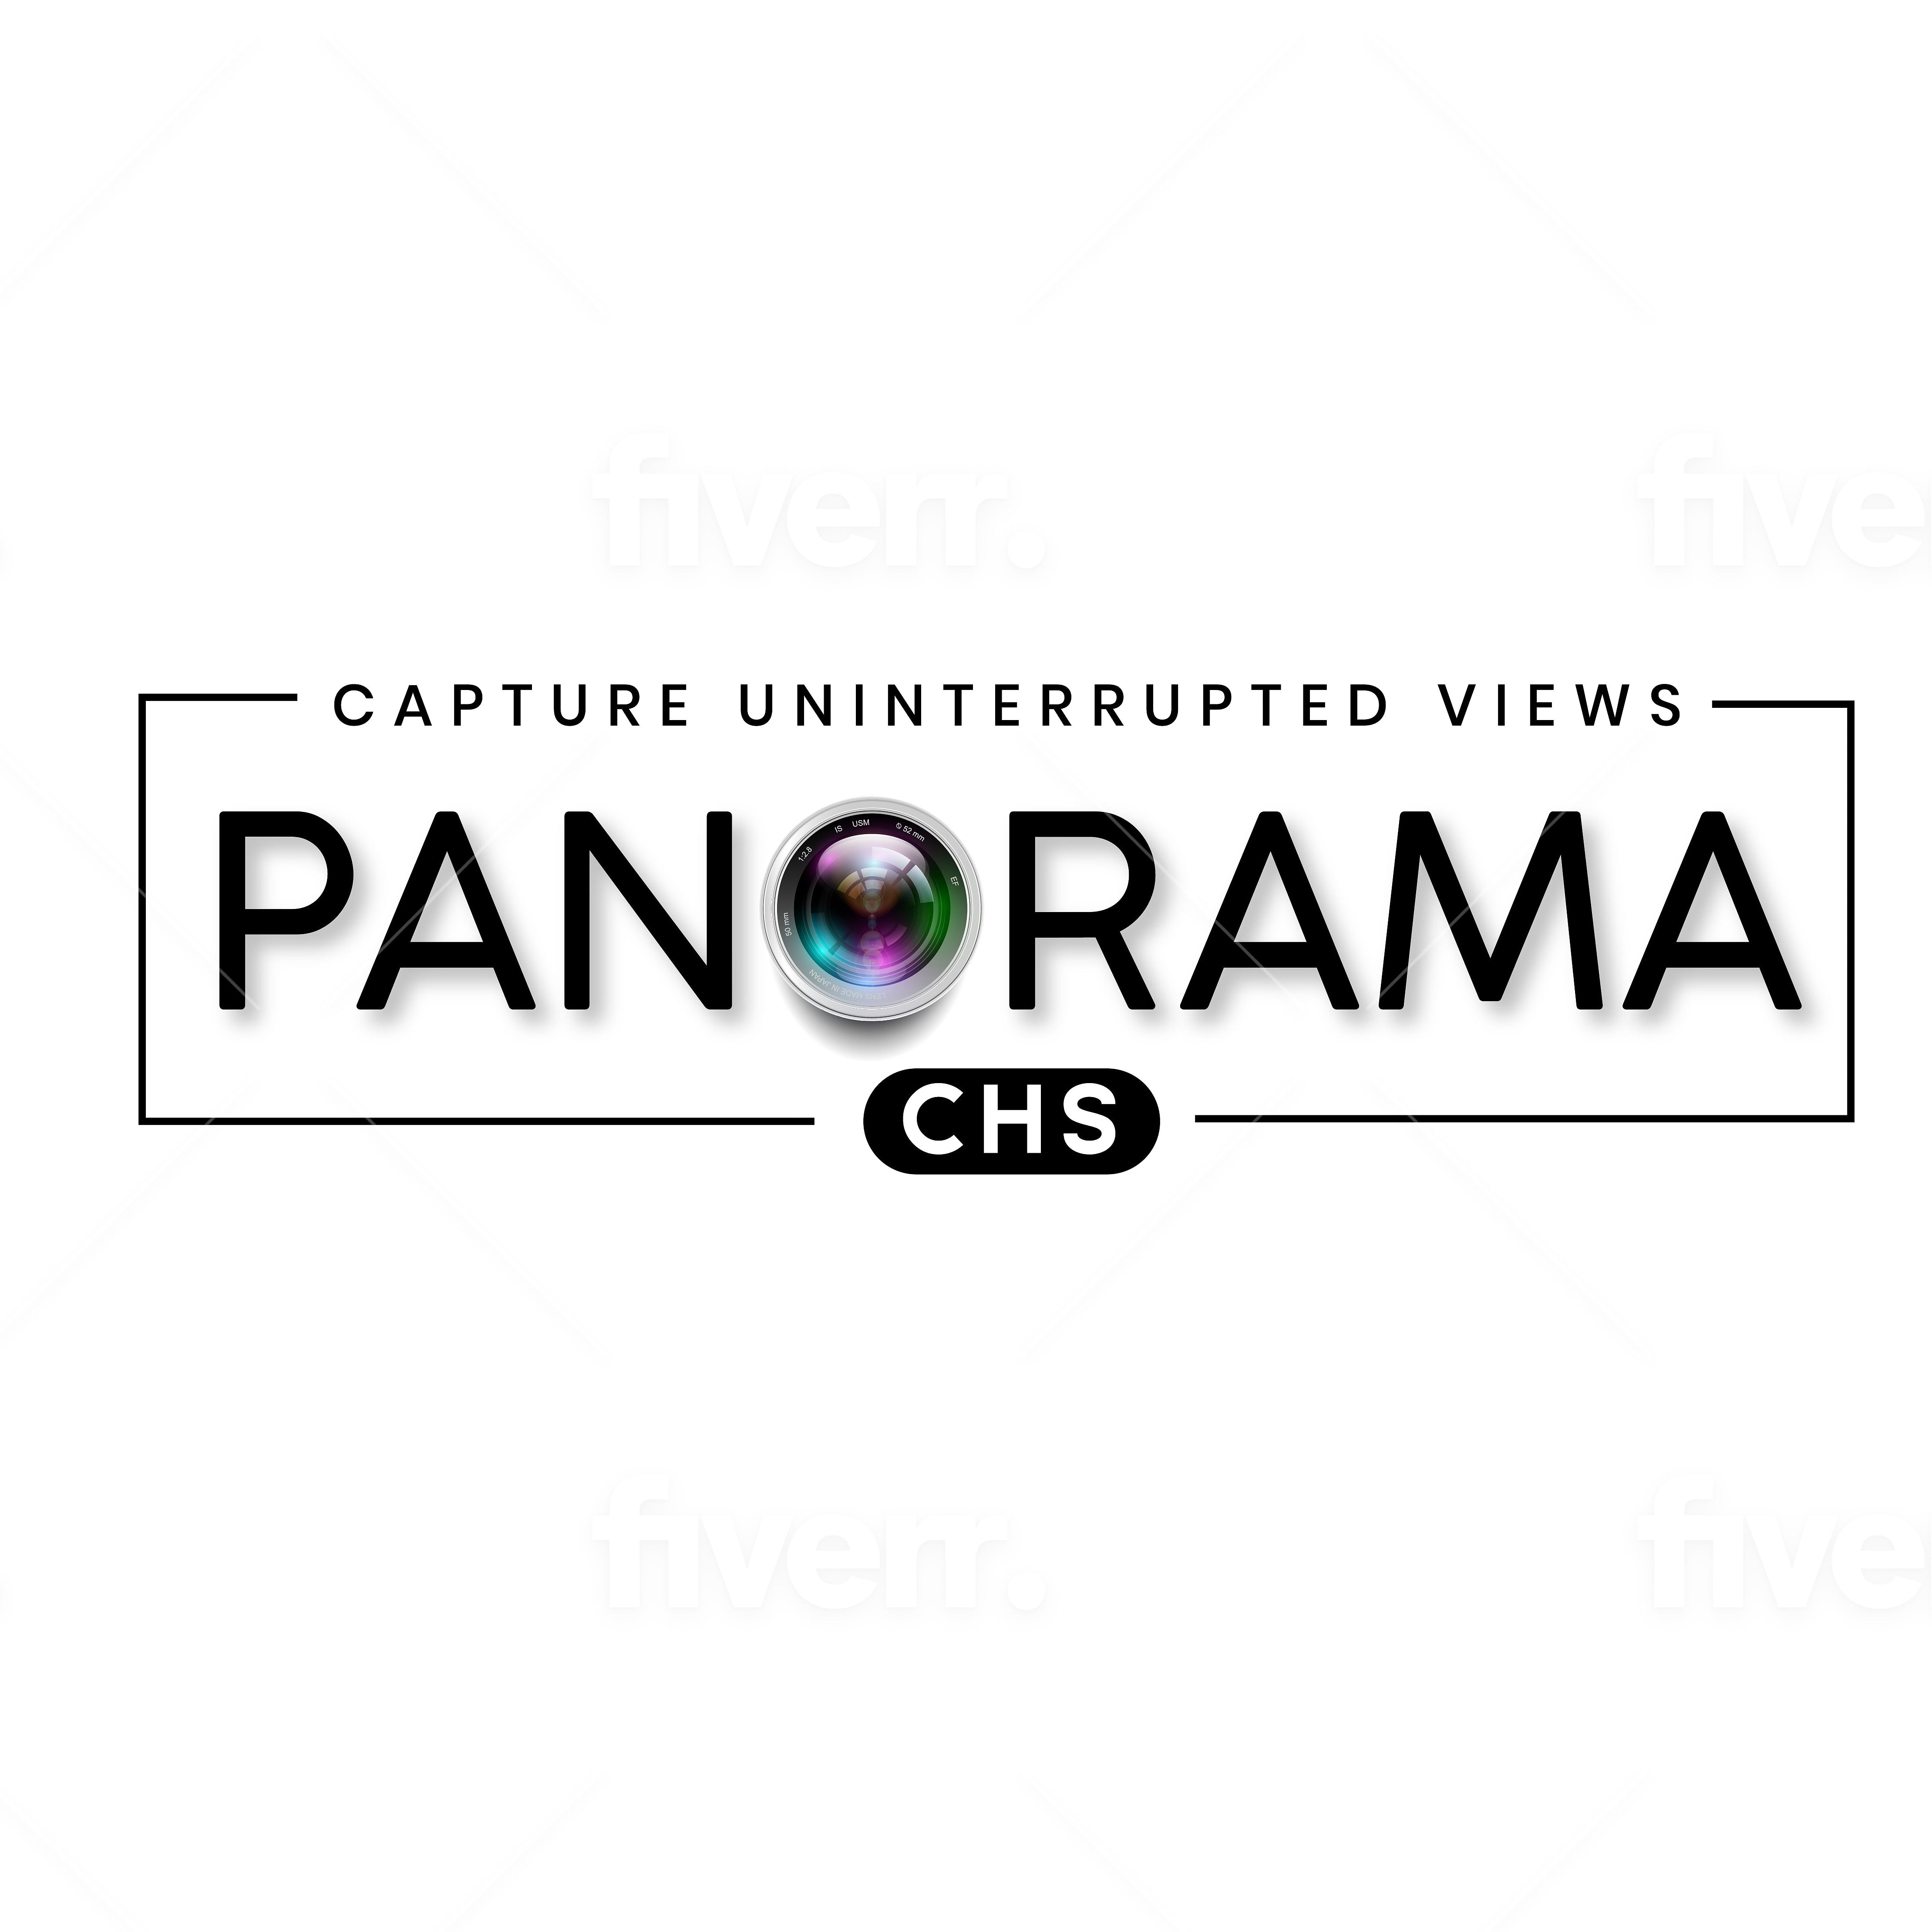 Panorama CHS